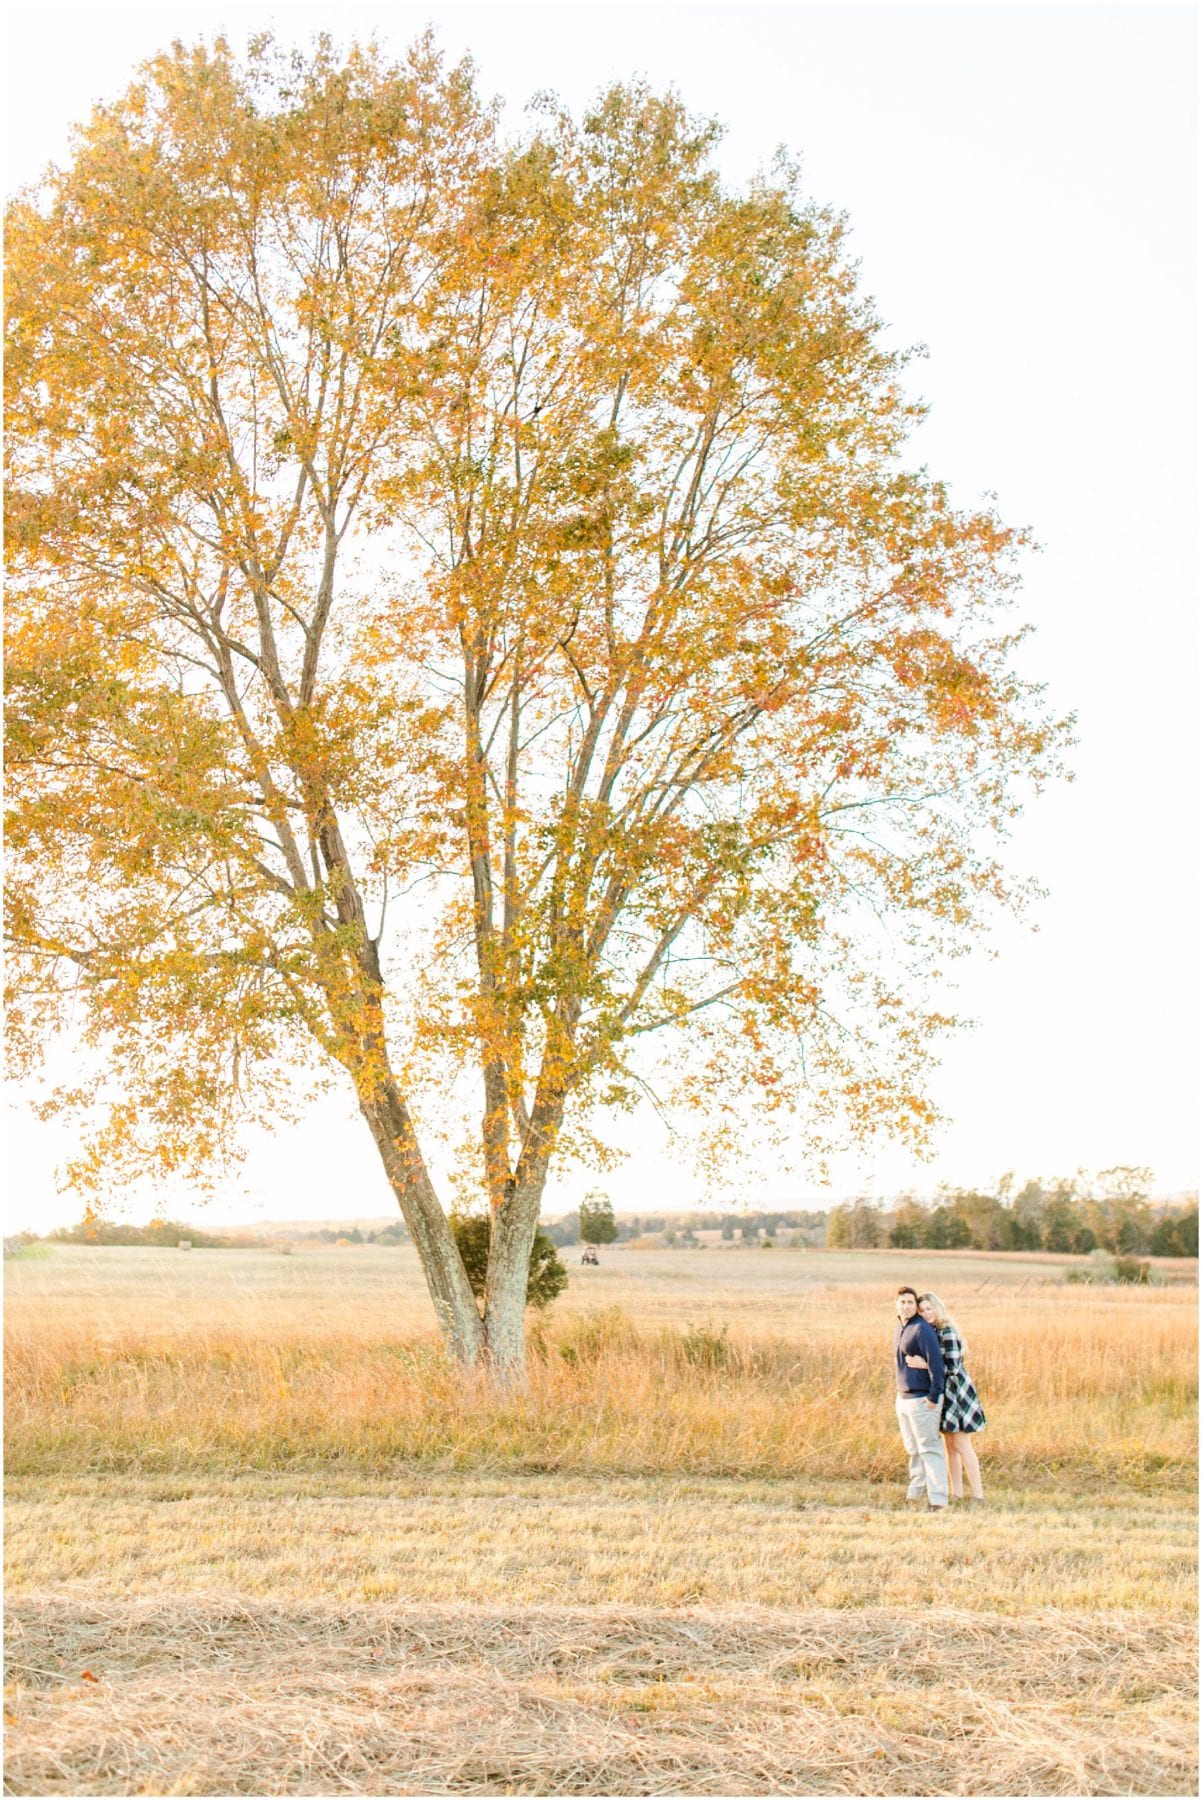 Autumn Manassas Battlefield Engagement Session by Megan Kelsey Photography-185.jpg